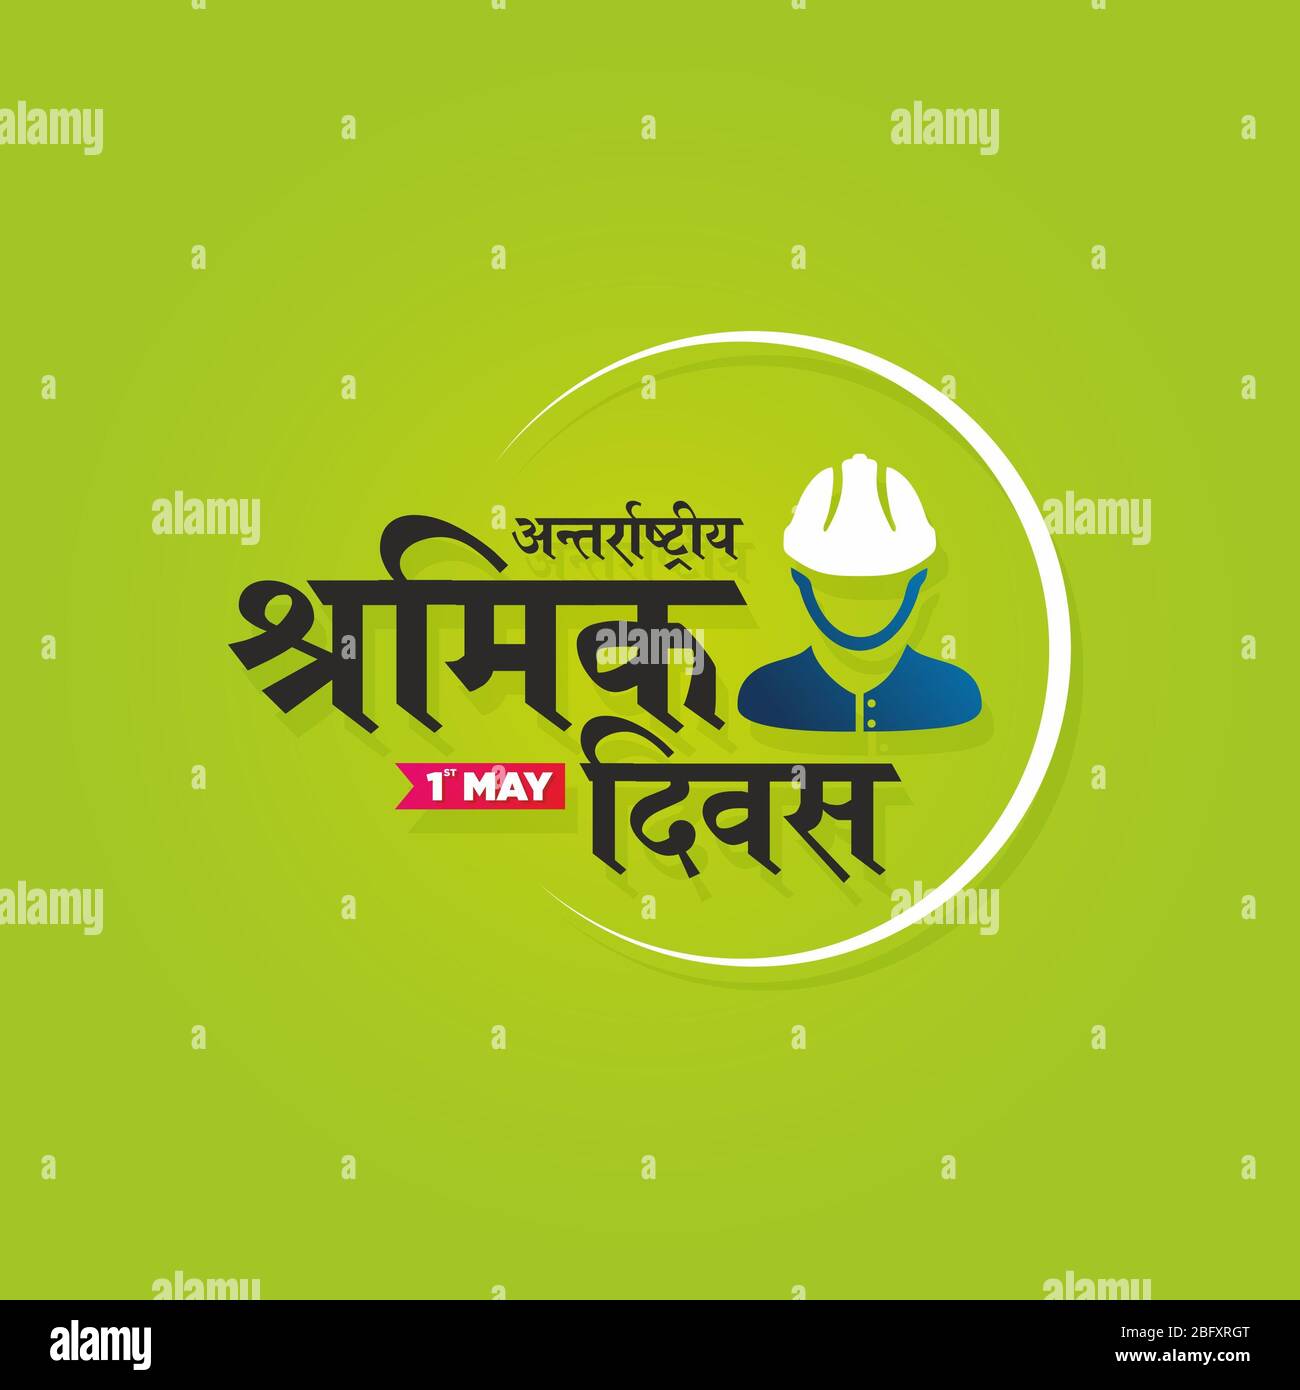 Hindi Typography 'Antarrastriya Shramik Diwas' Means Happy Labour Day - Banner Stock Photo